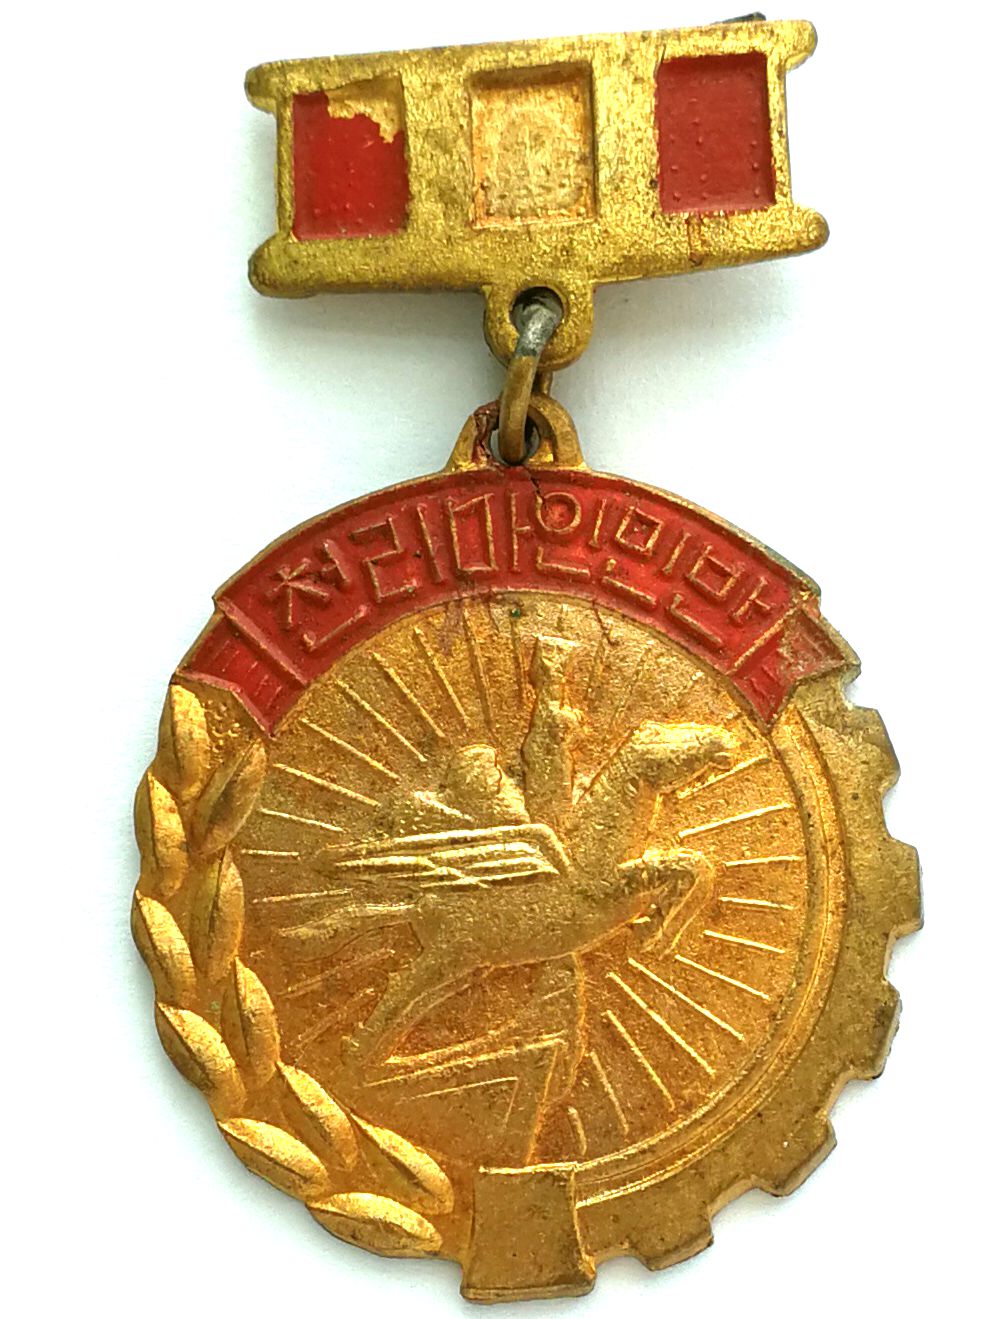 L5400, Korea Military Medal (Chollima Movement), Korean War 1950's